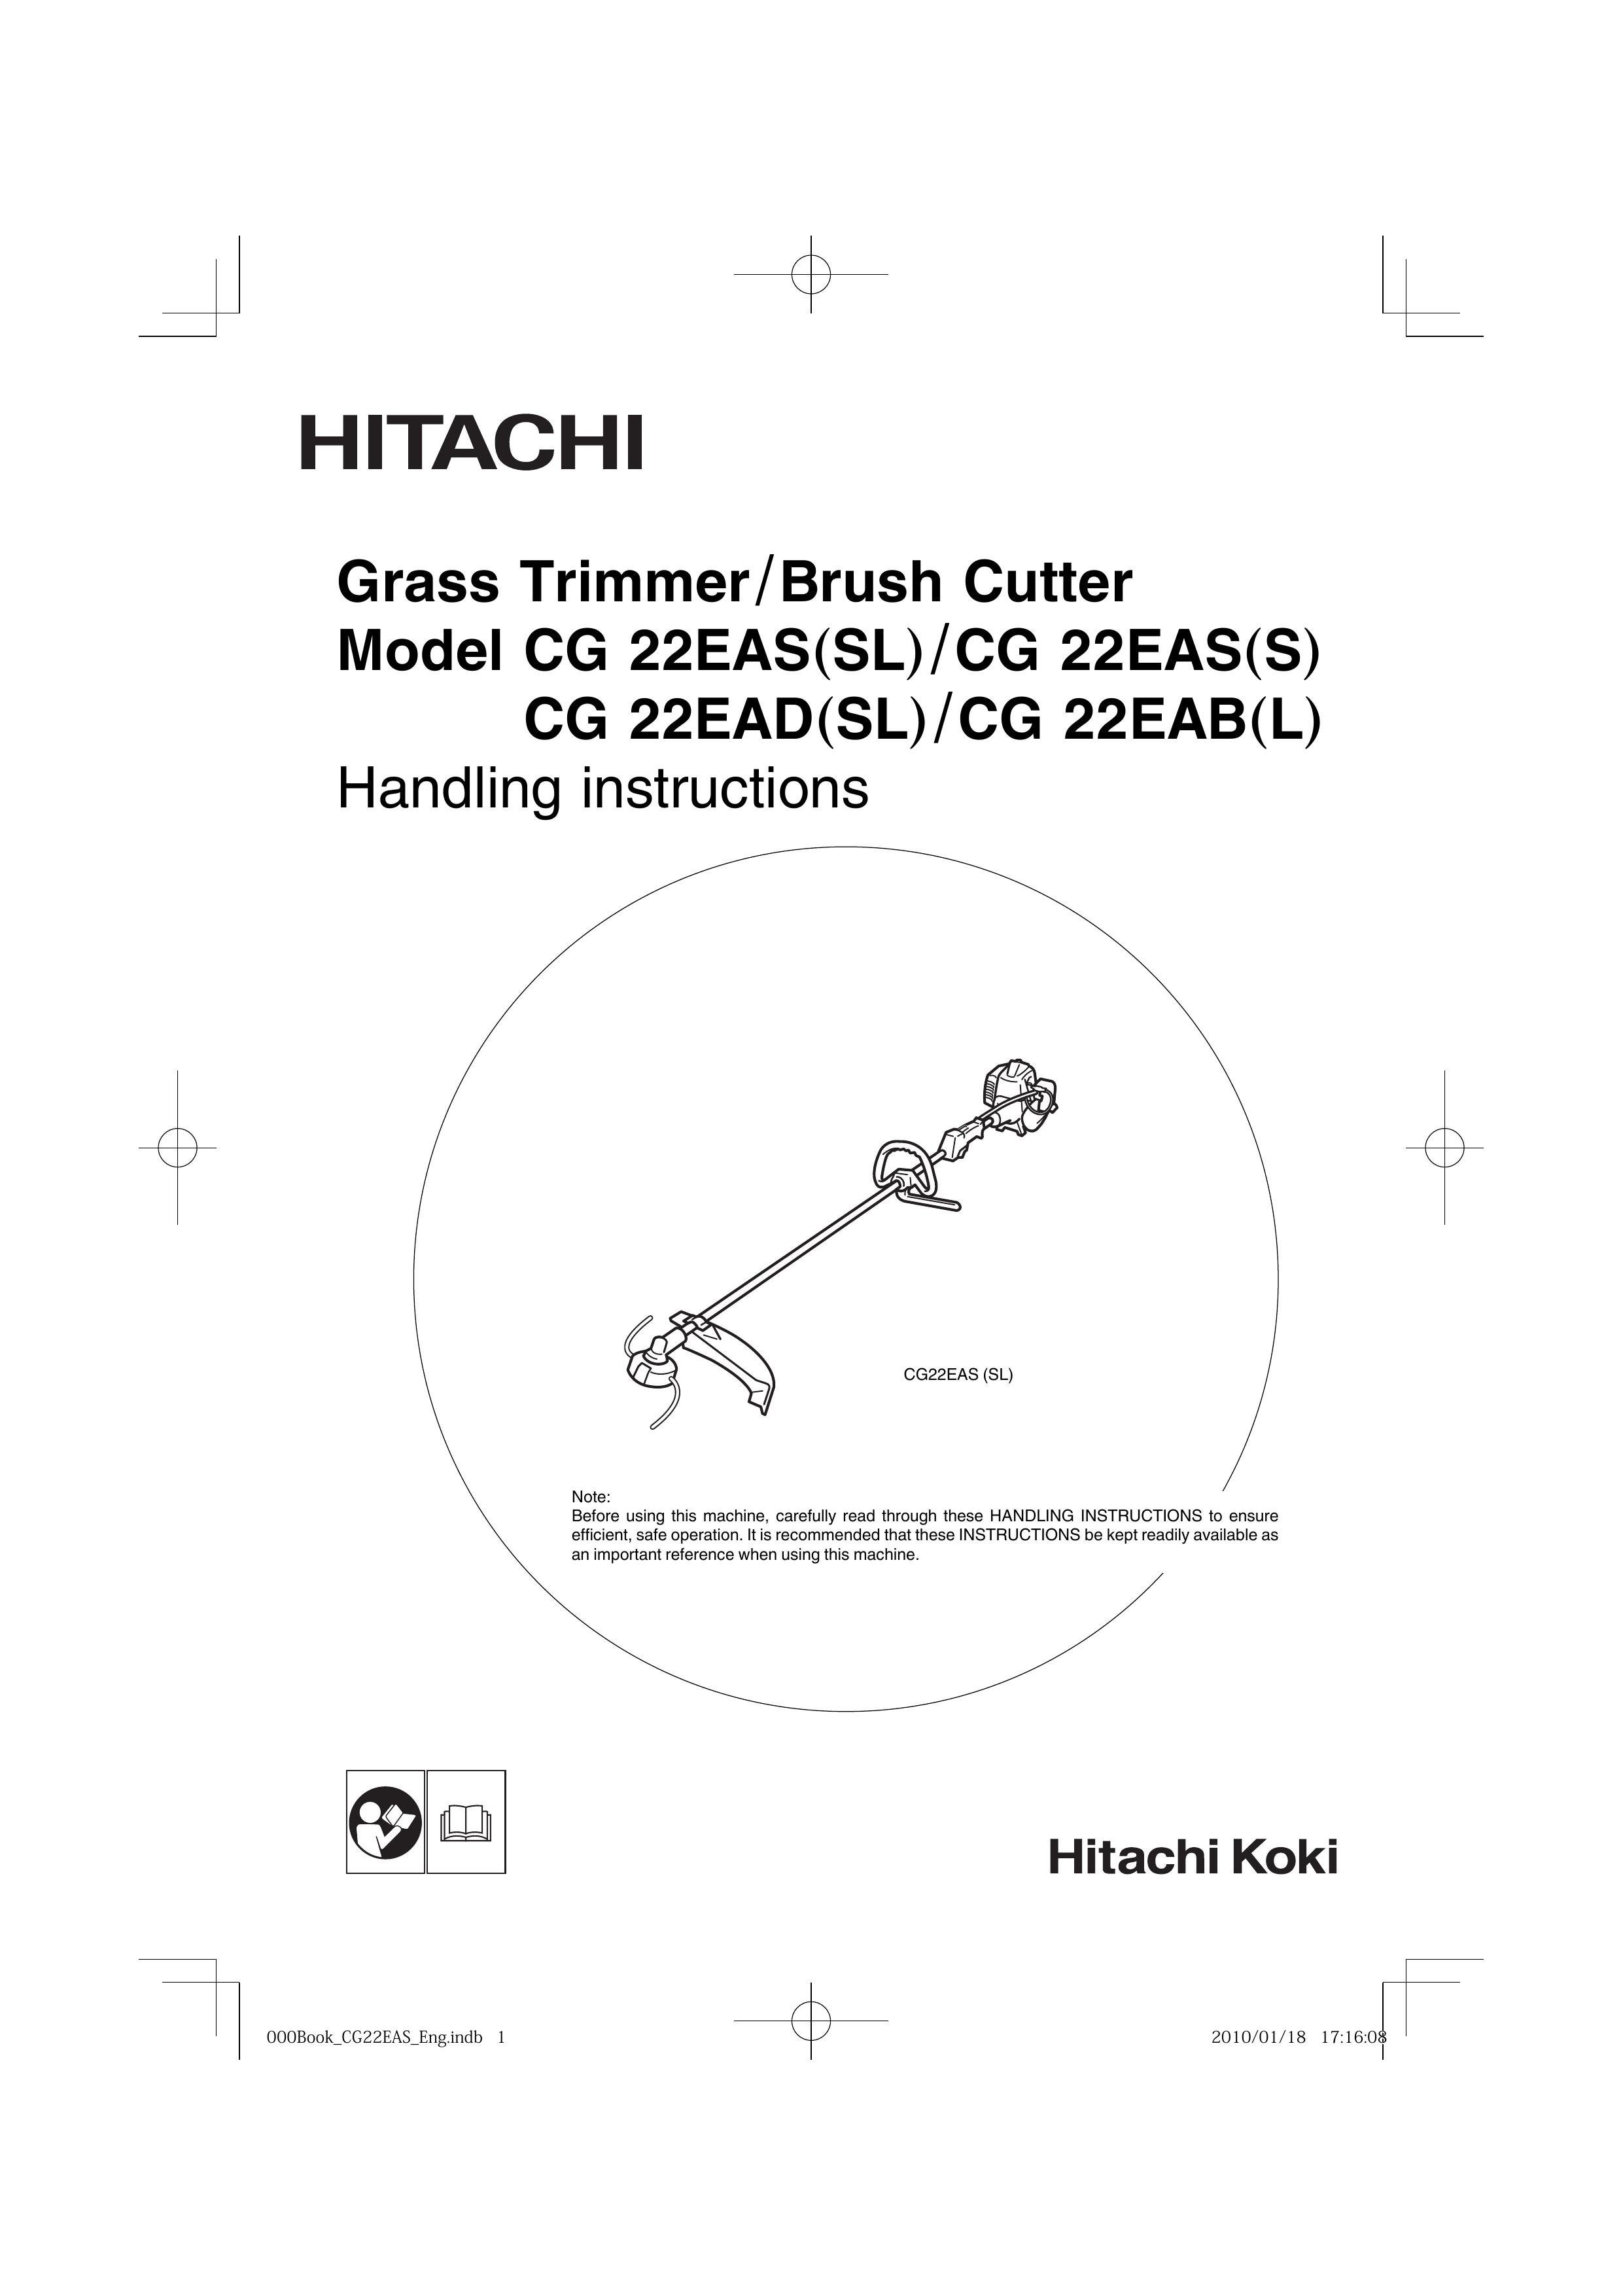 Hitachi Koki USA CG 22EAB(L) Trimmer User Manual